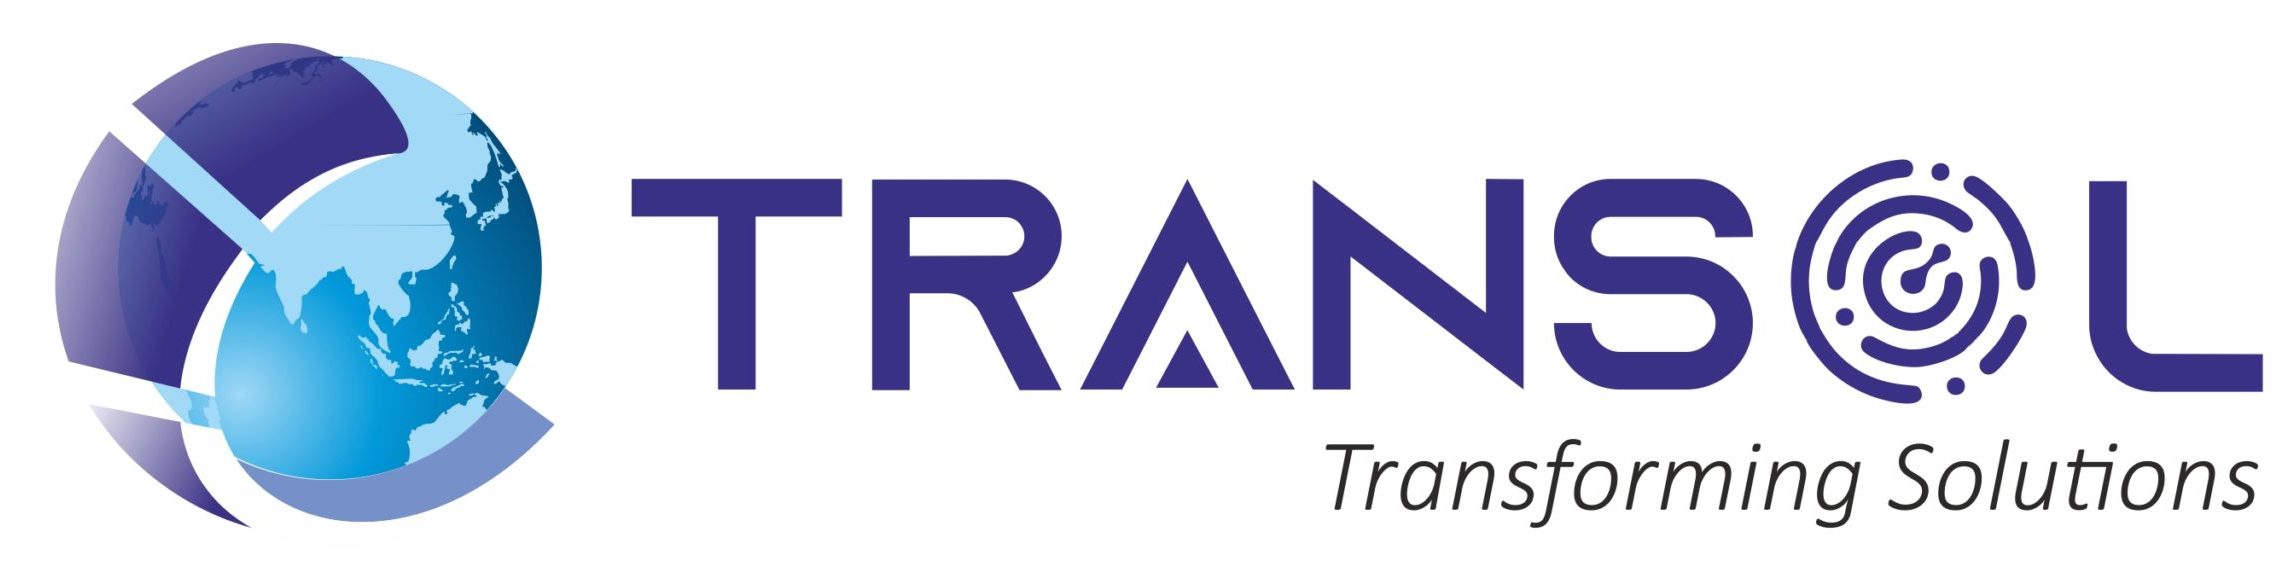 TranSol, Inc